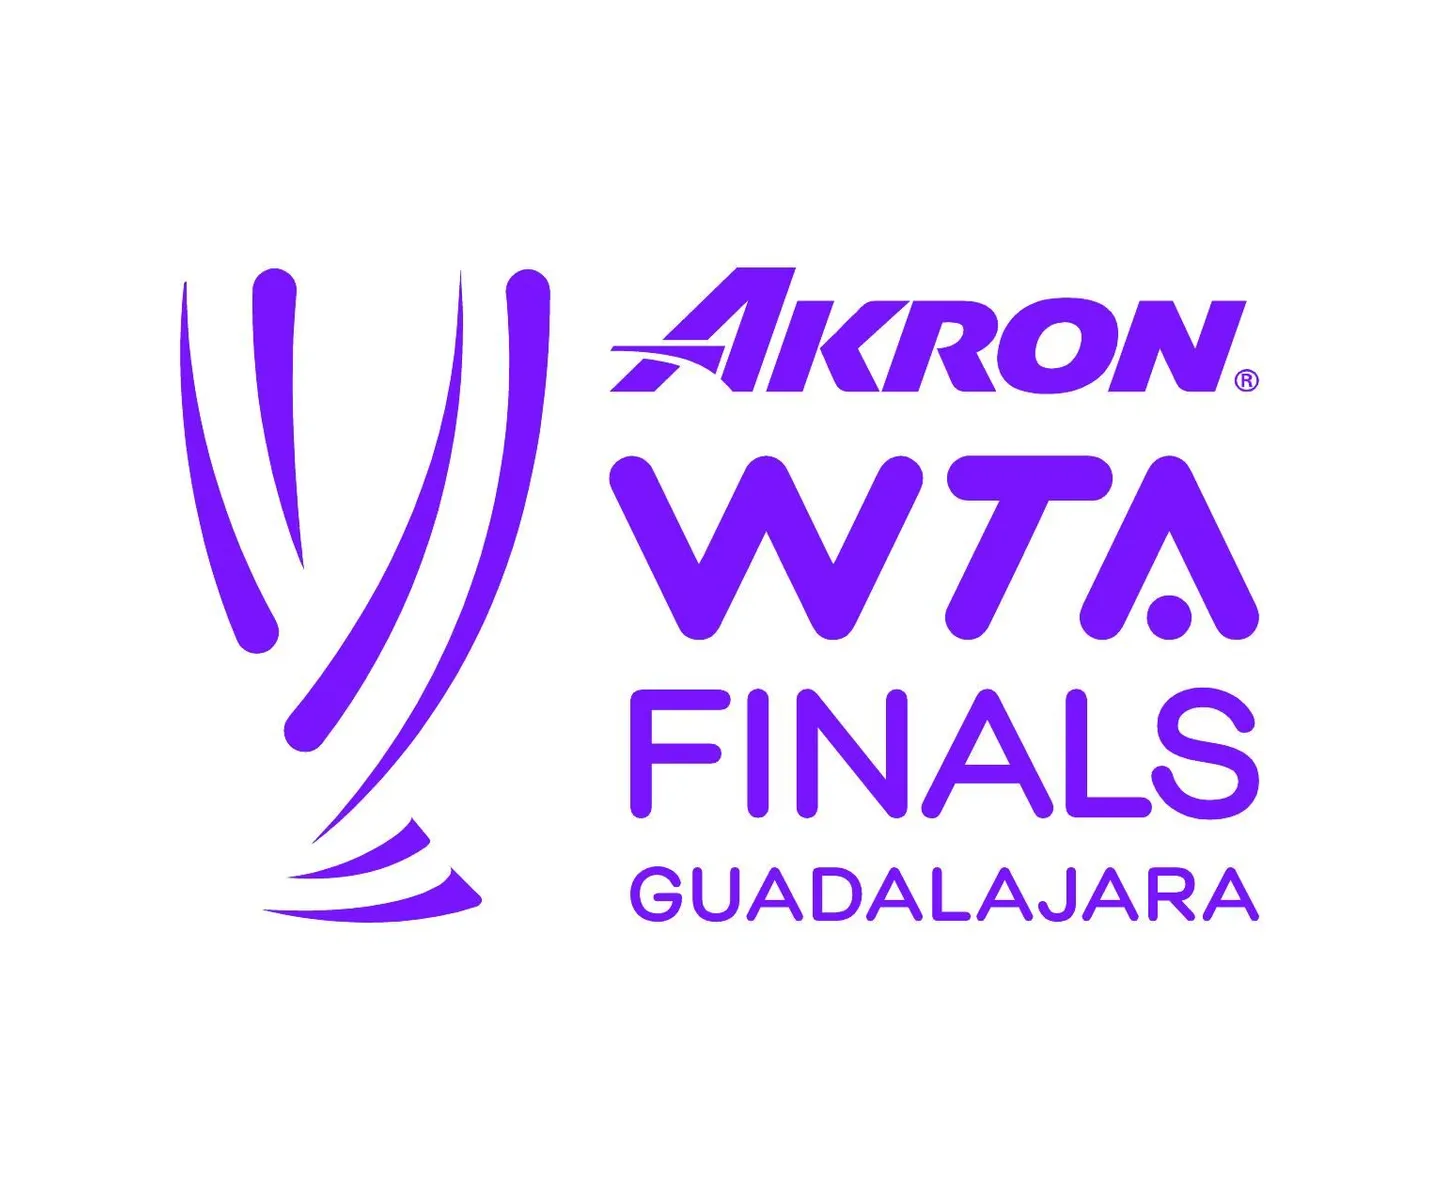 WTA 1000 FINALS GUADALAJARA